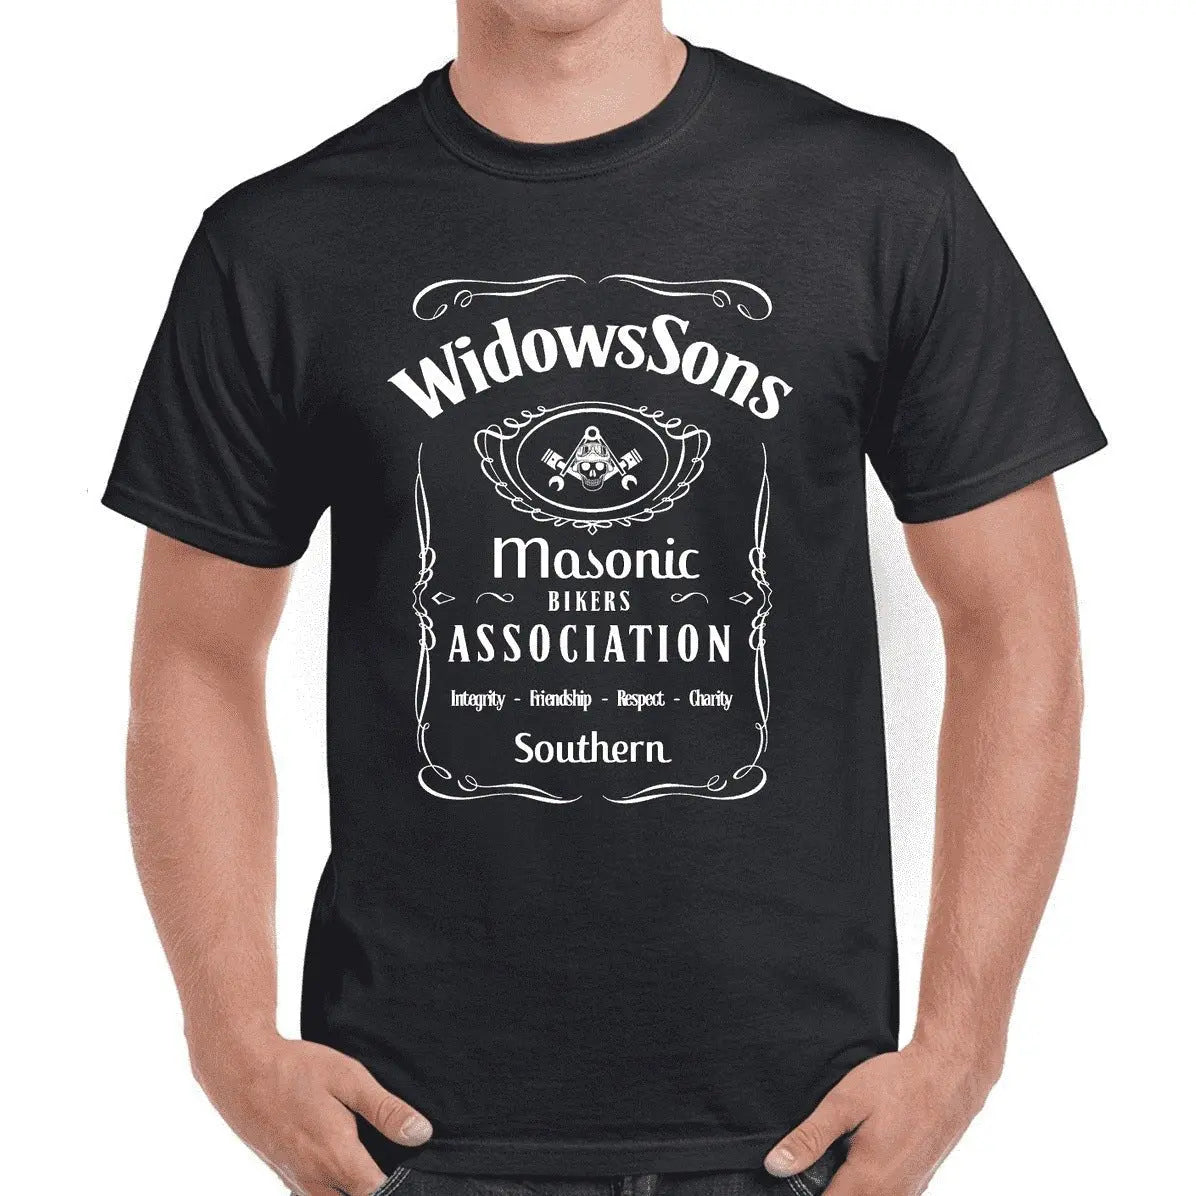 Widows Sons JD - Southern T-Shirt redplume